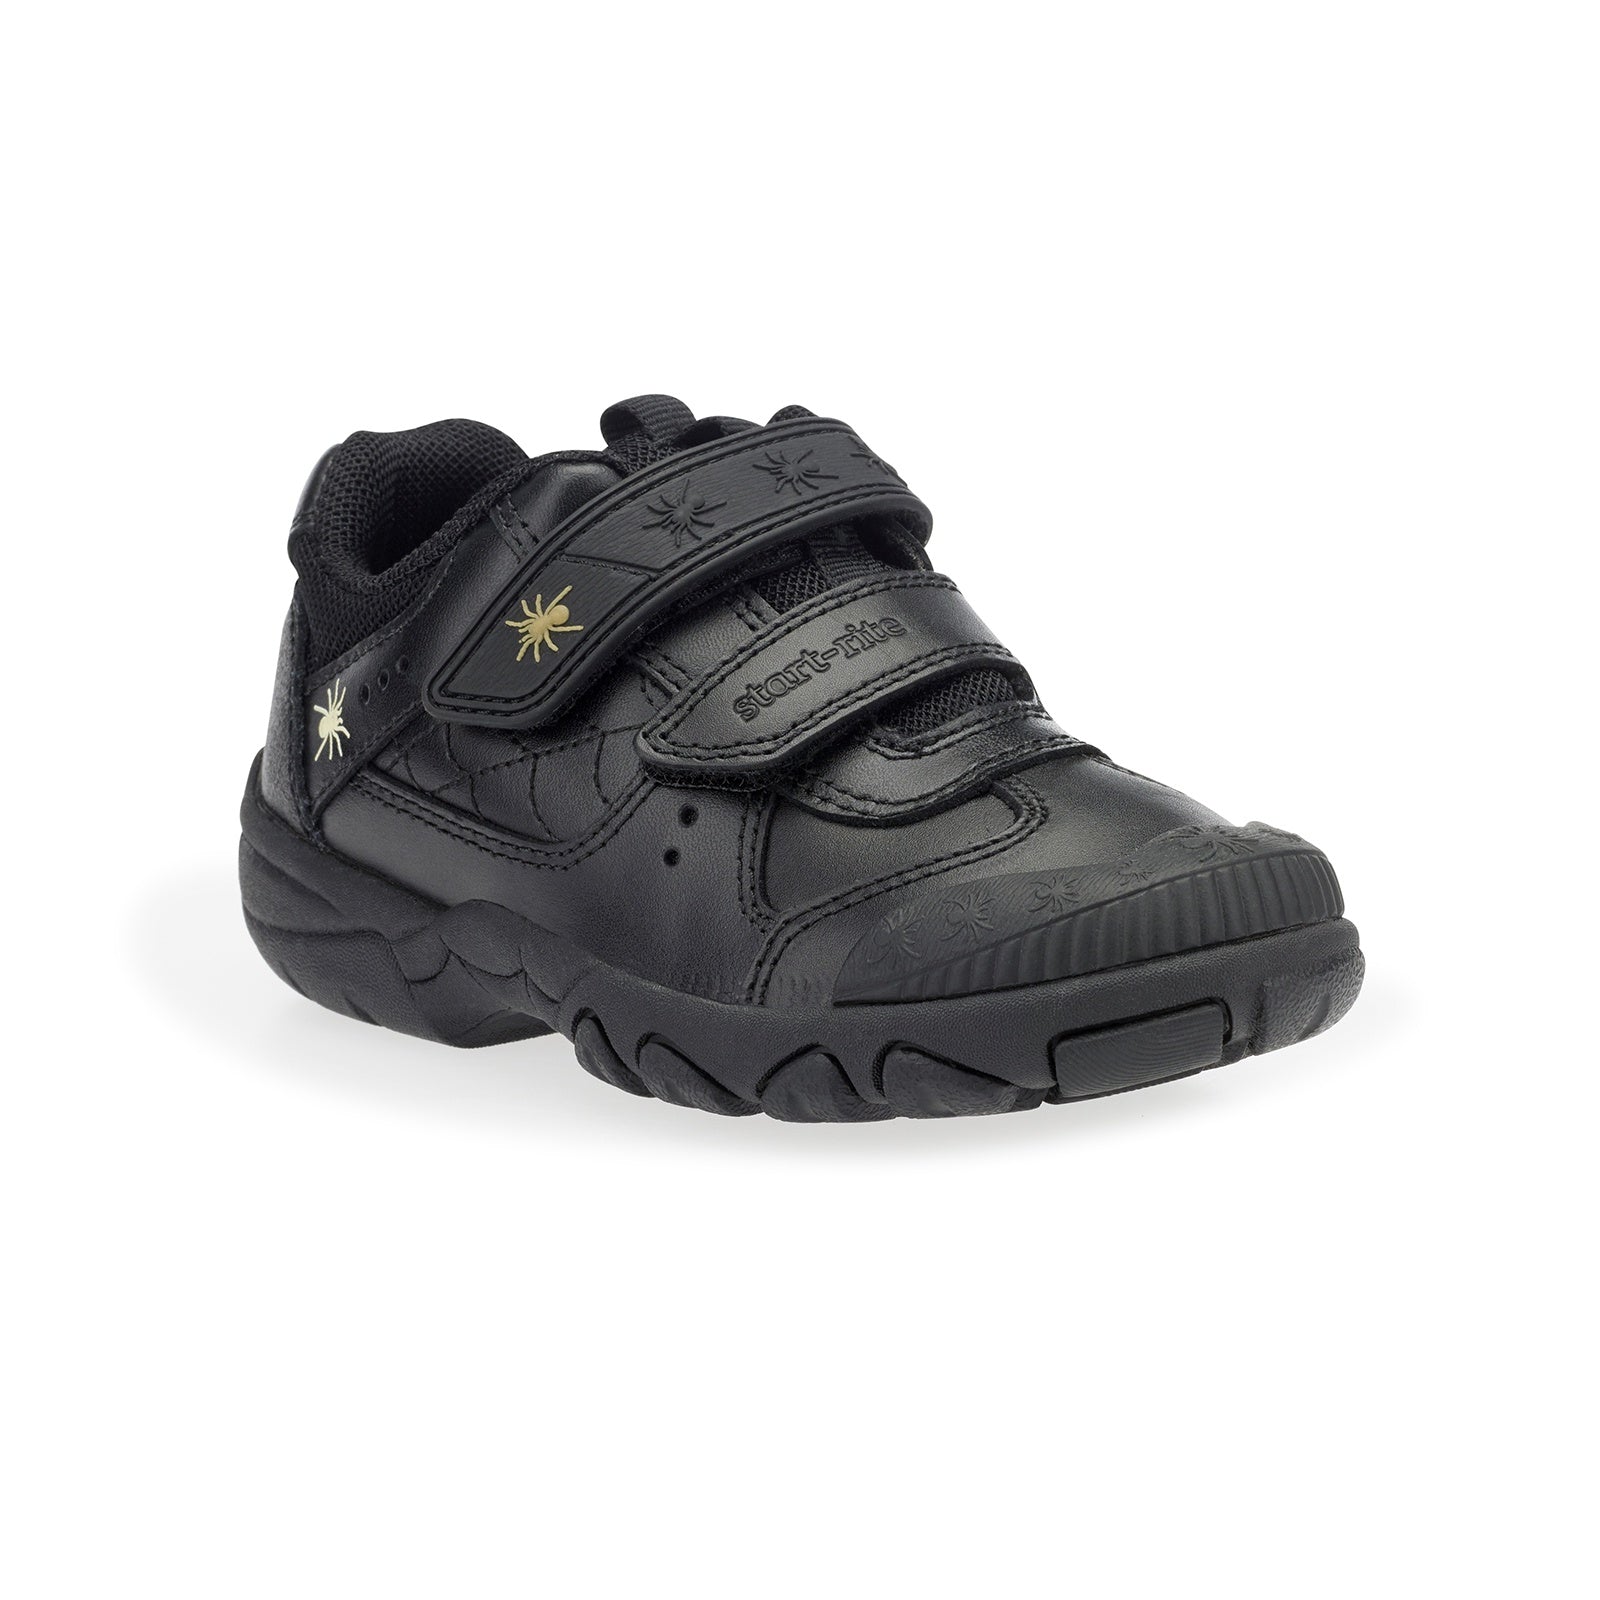 Start-Rite Tarantula 2272-7 Boys Black Leather Rip-Tape Fastening School Shoe - elevate your sole